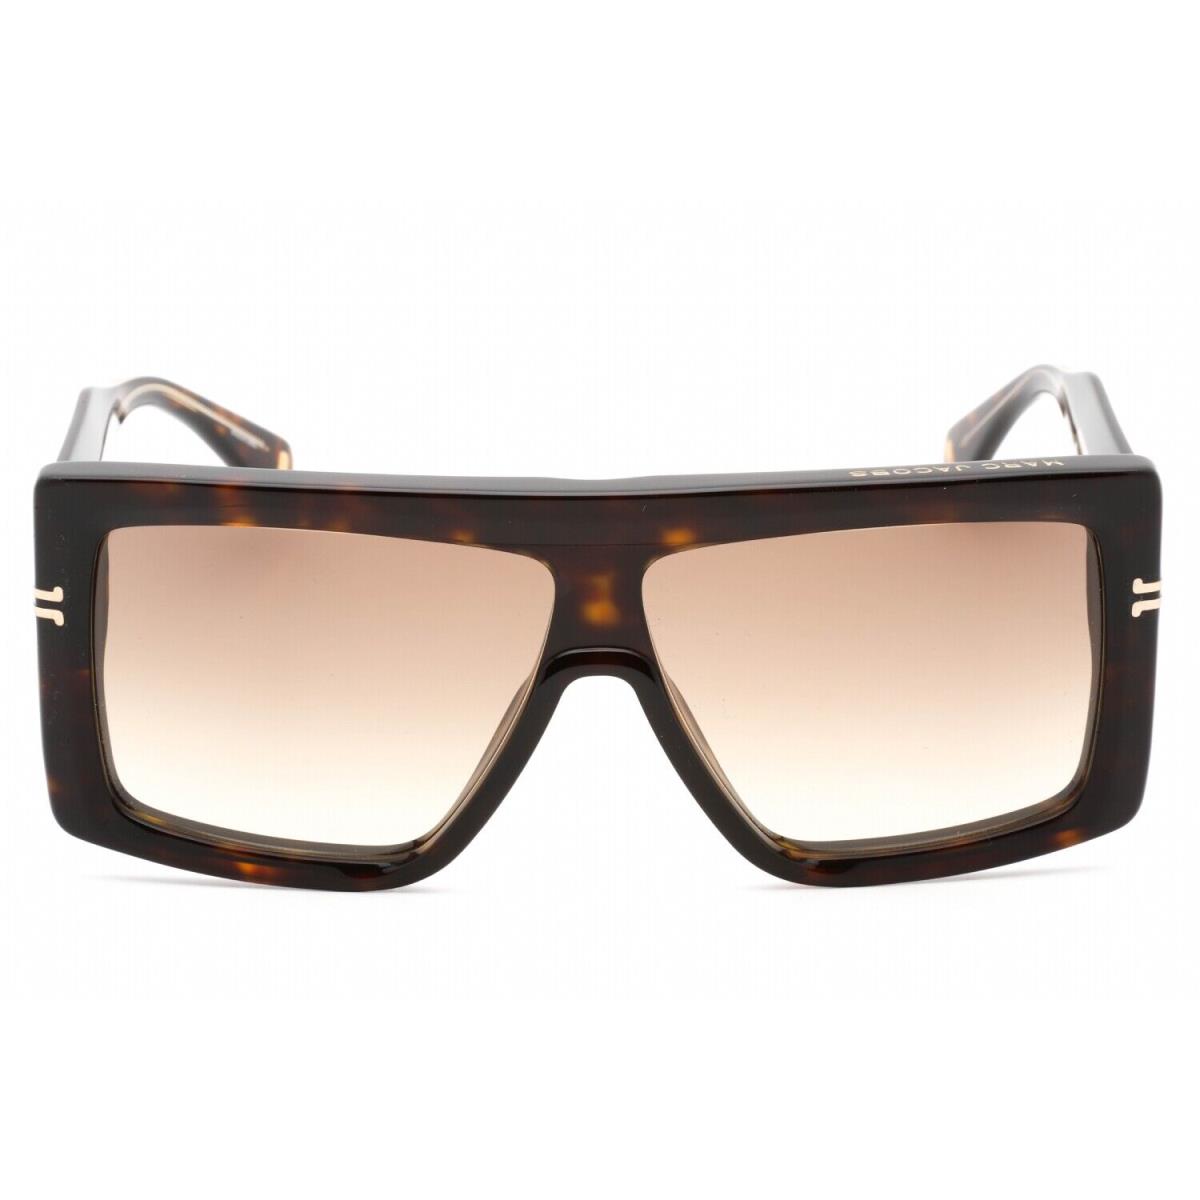 Marc Jacobs MJ1061S-KRZHA-59 Sunglasses Size 59mm 145mm 09mm Havana Women